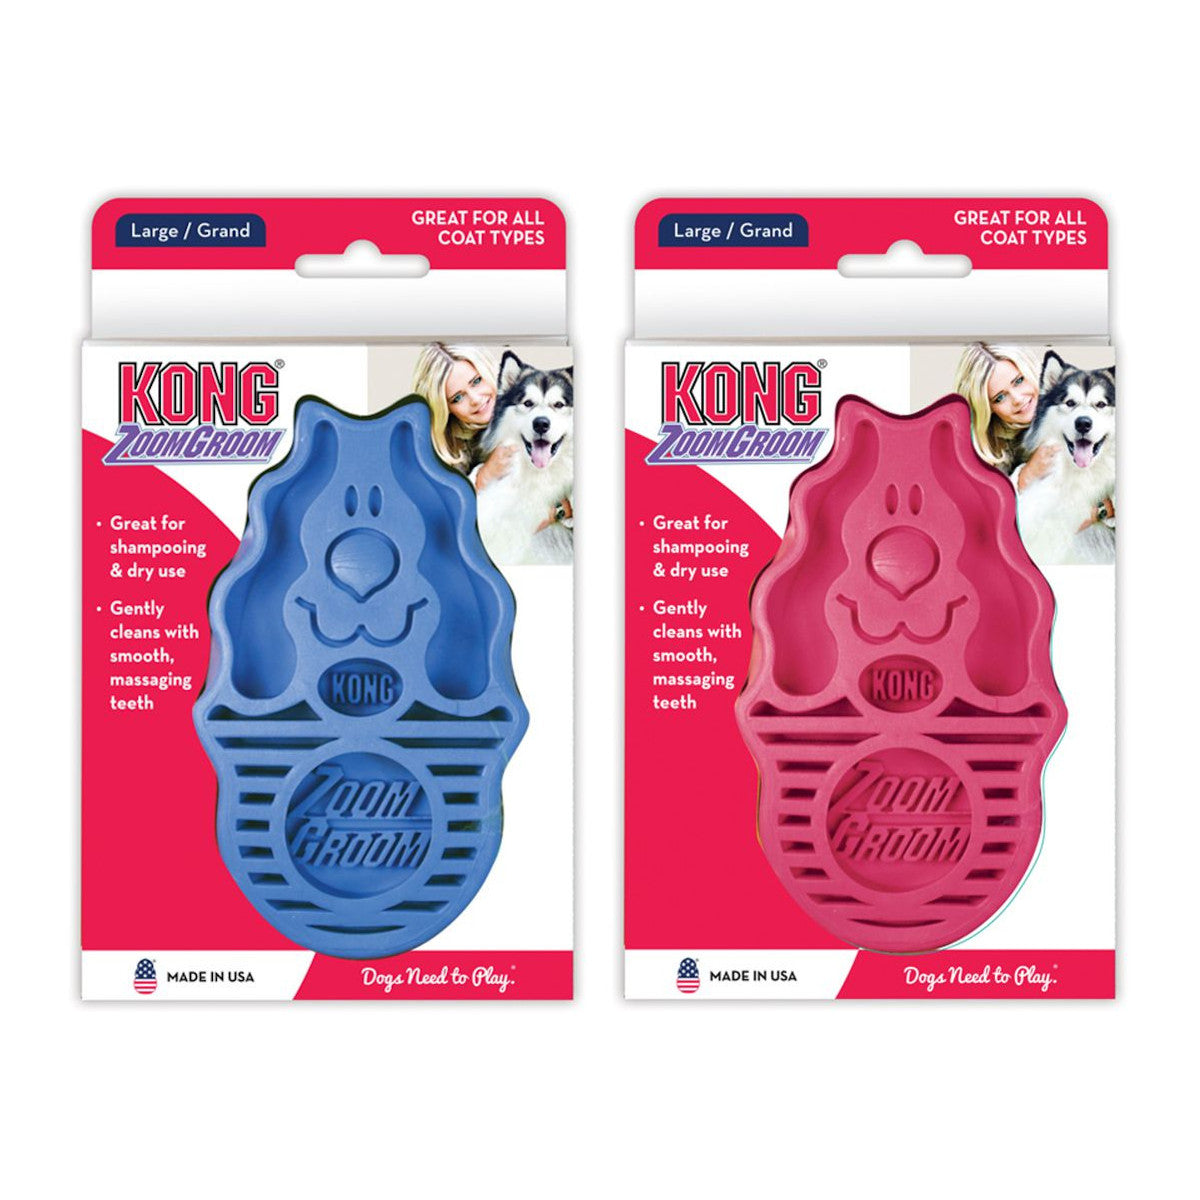 KONG ZoomGroom Brush - Retail Pack